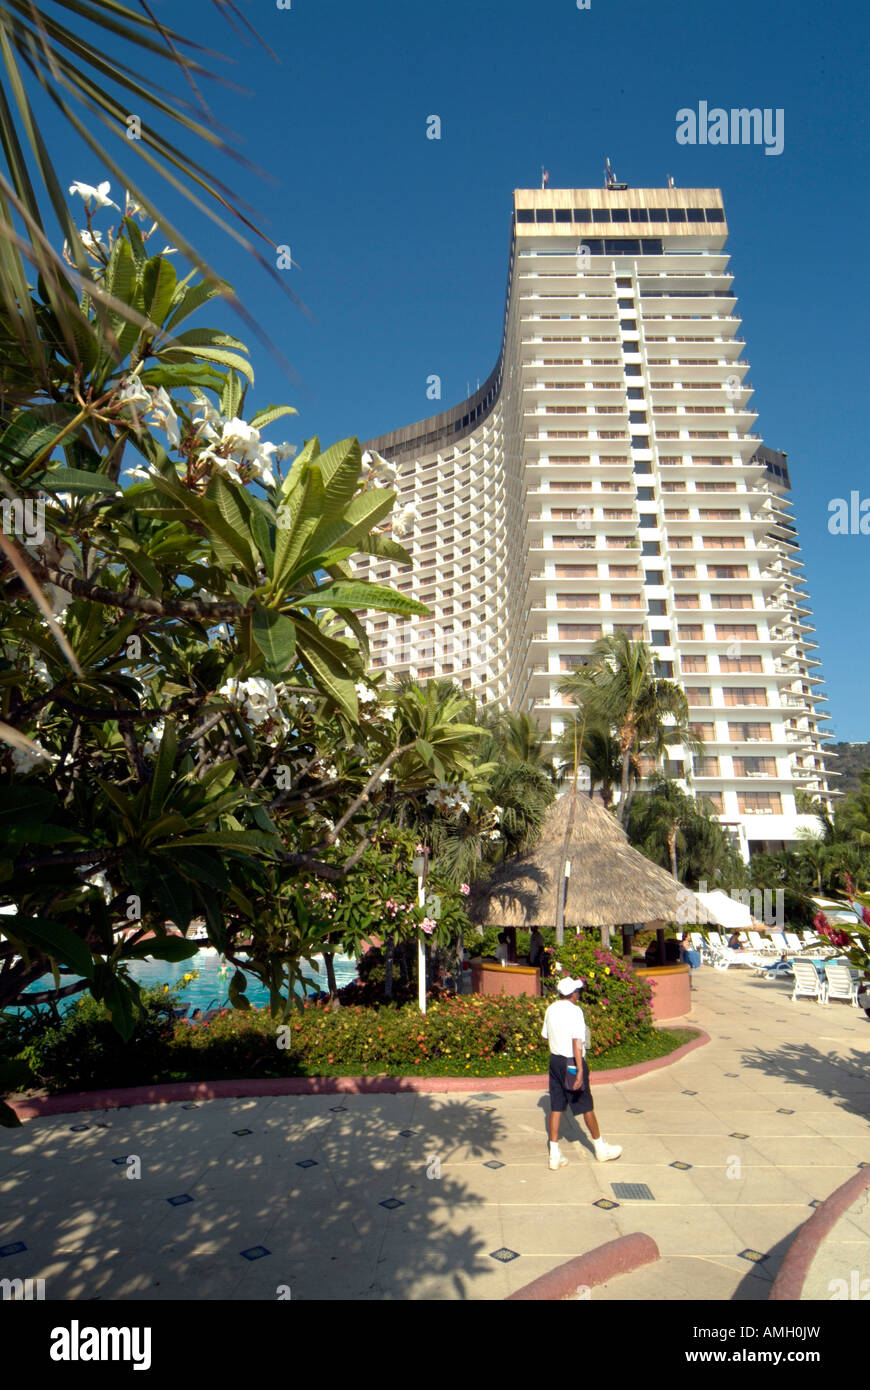 Mexico, Guerrero, Acapulco, Hyatt Hotel, Pool area. Stock Photo